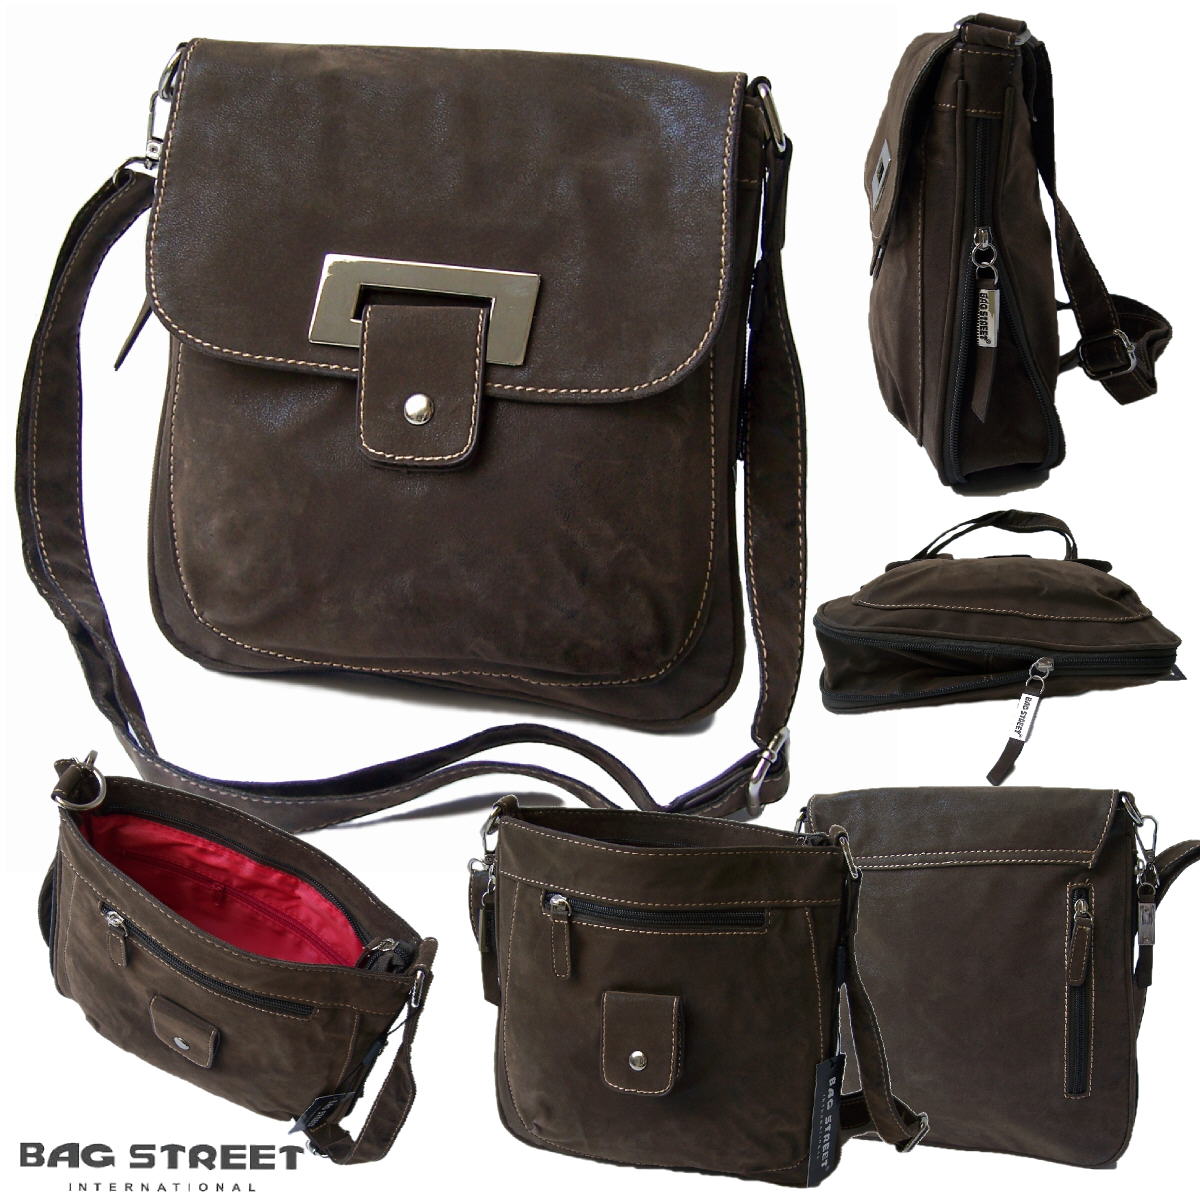 Bag Street Damentasche Umhängetasche Handtasche Schultertasche Leder 6632_1 